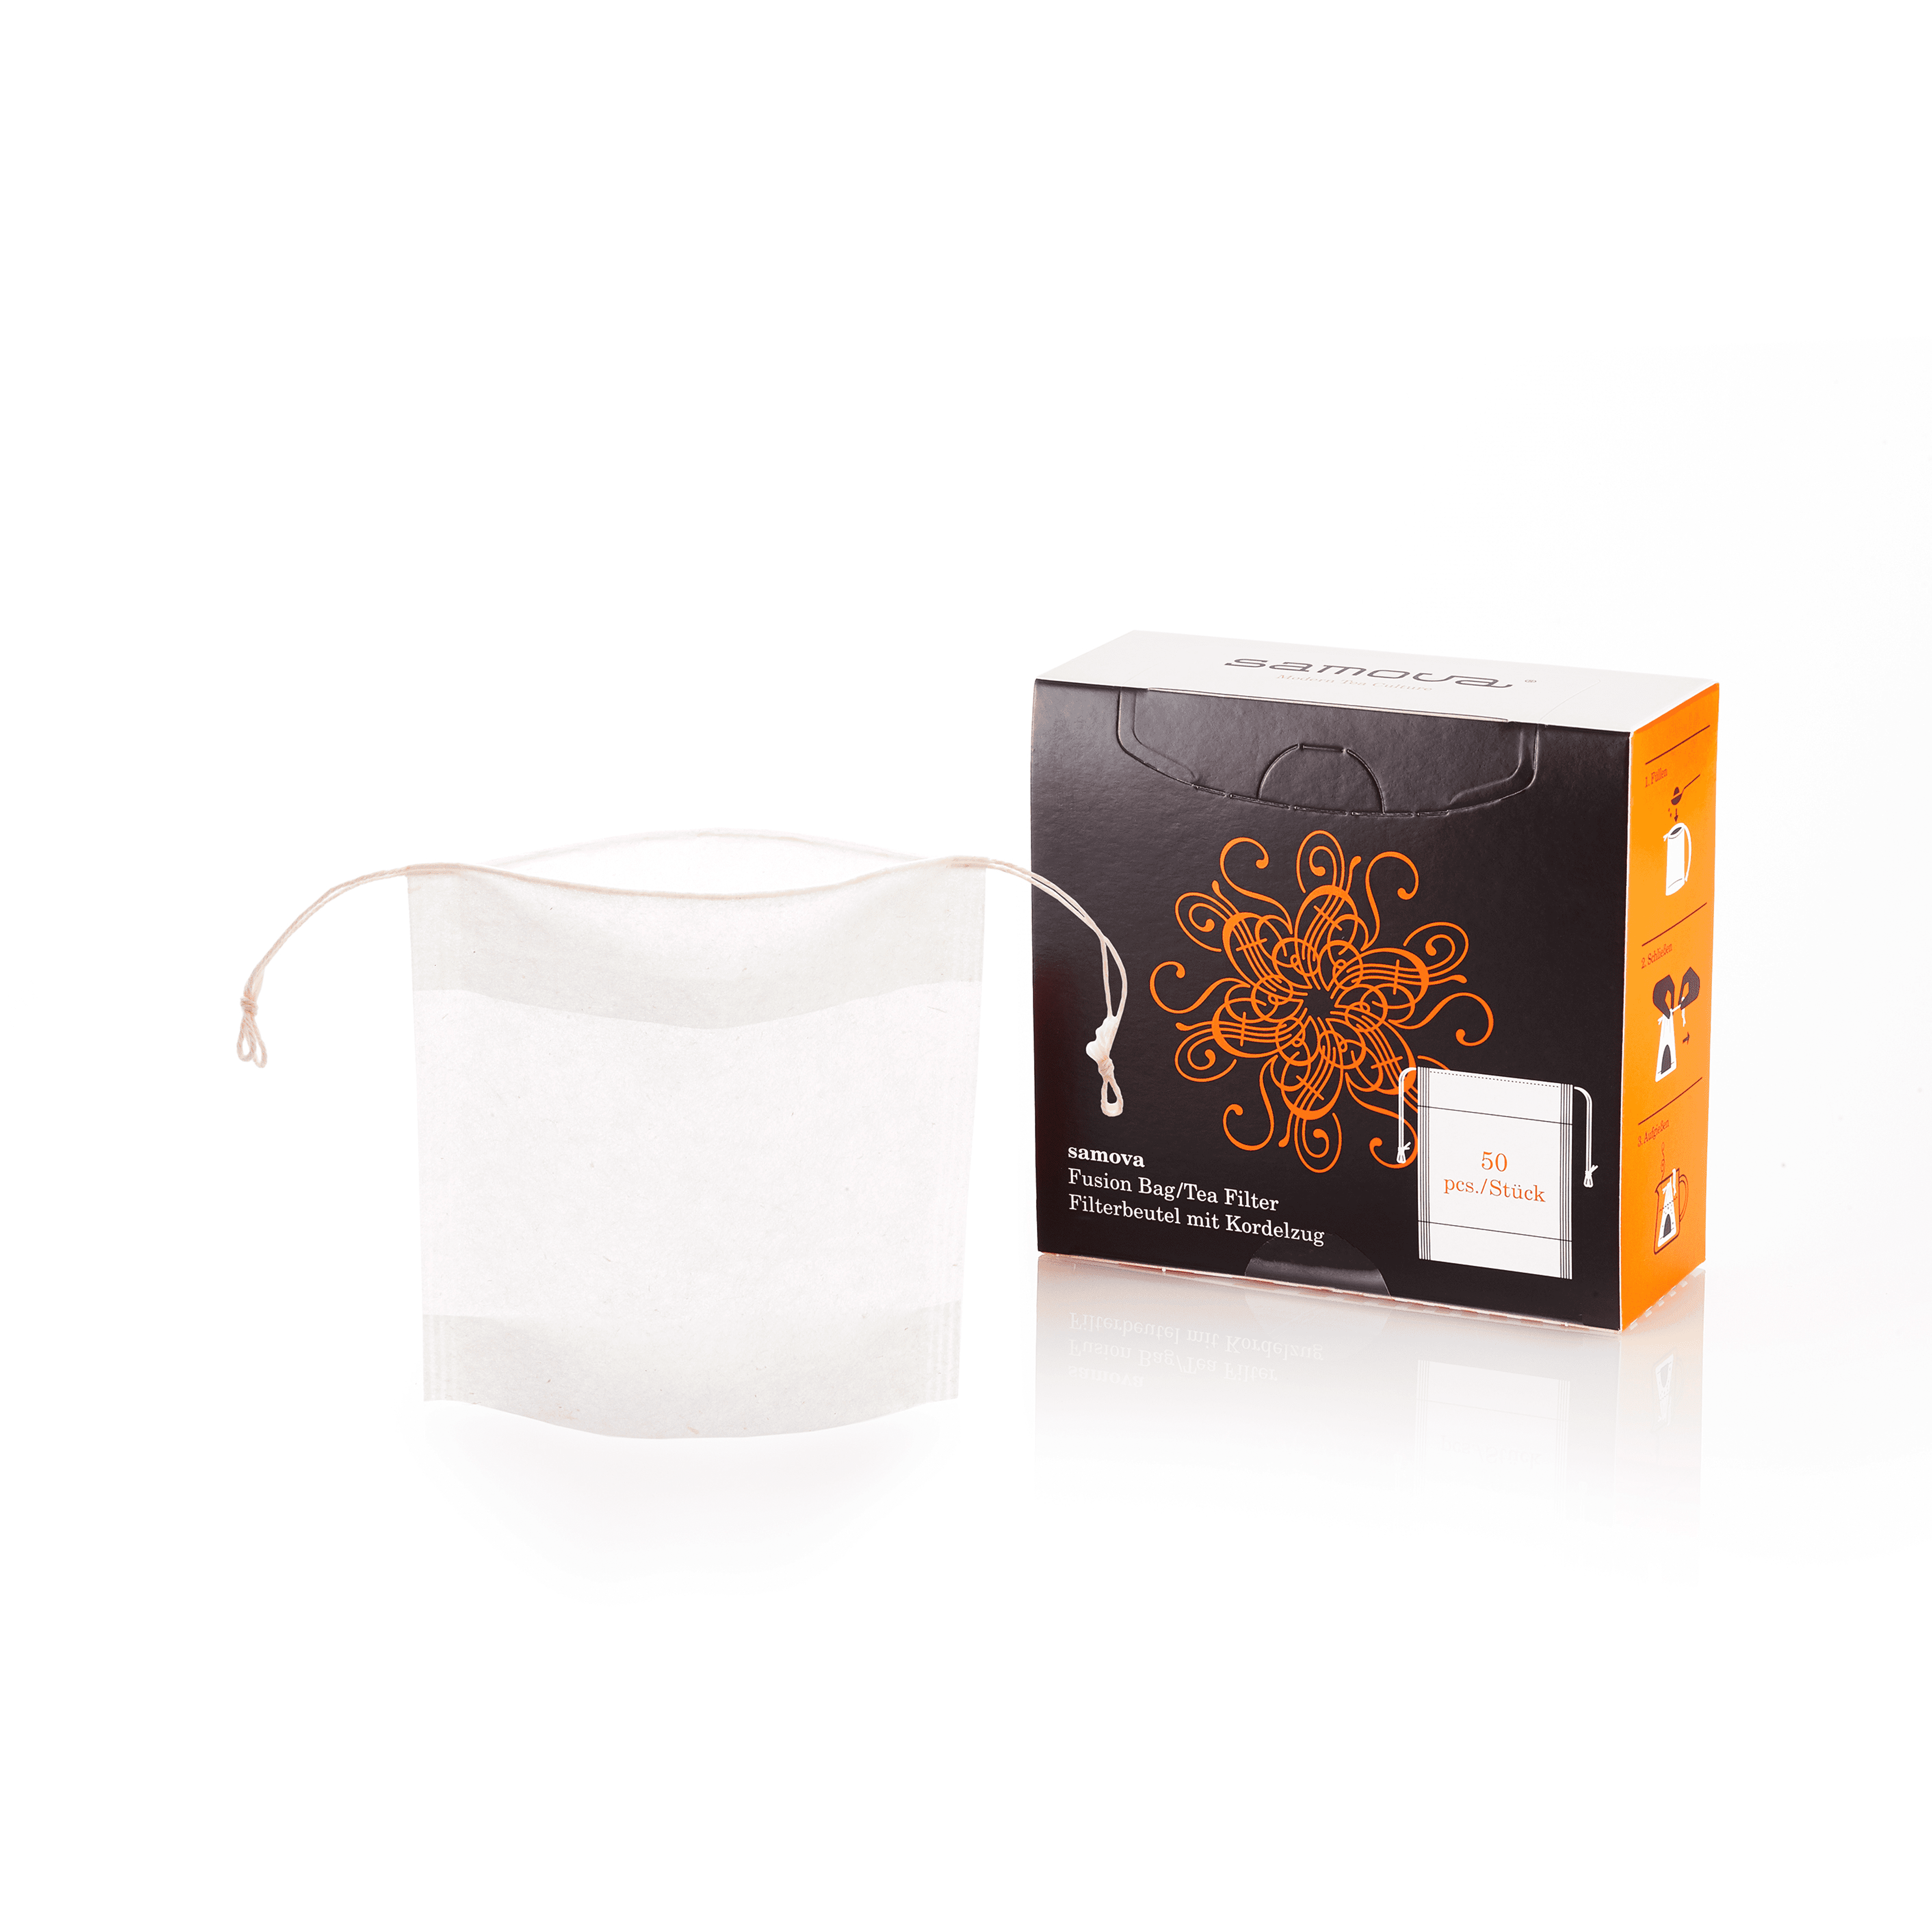 samova Fusion Bag / Tea Filter